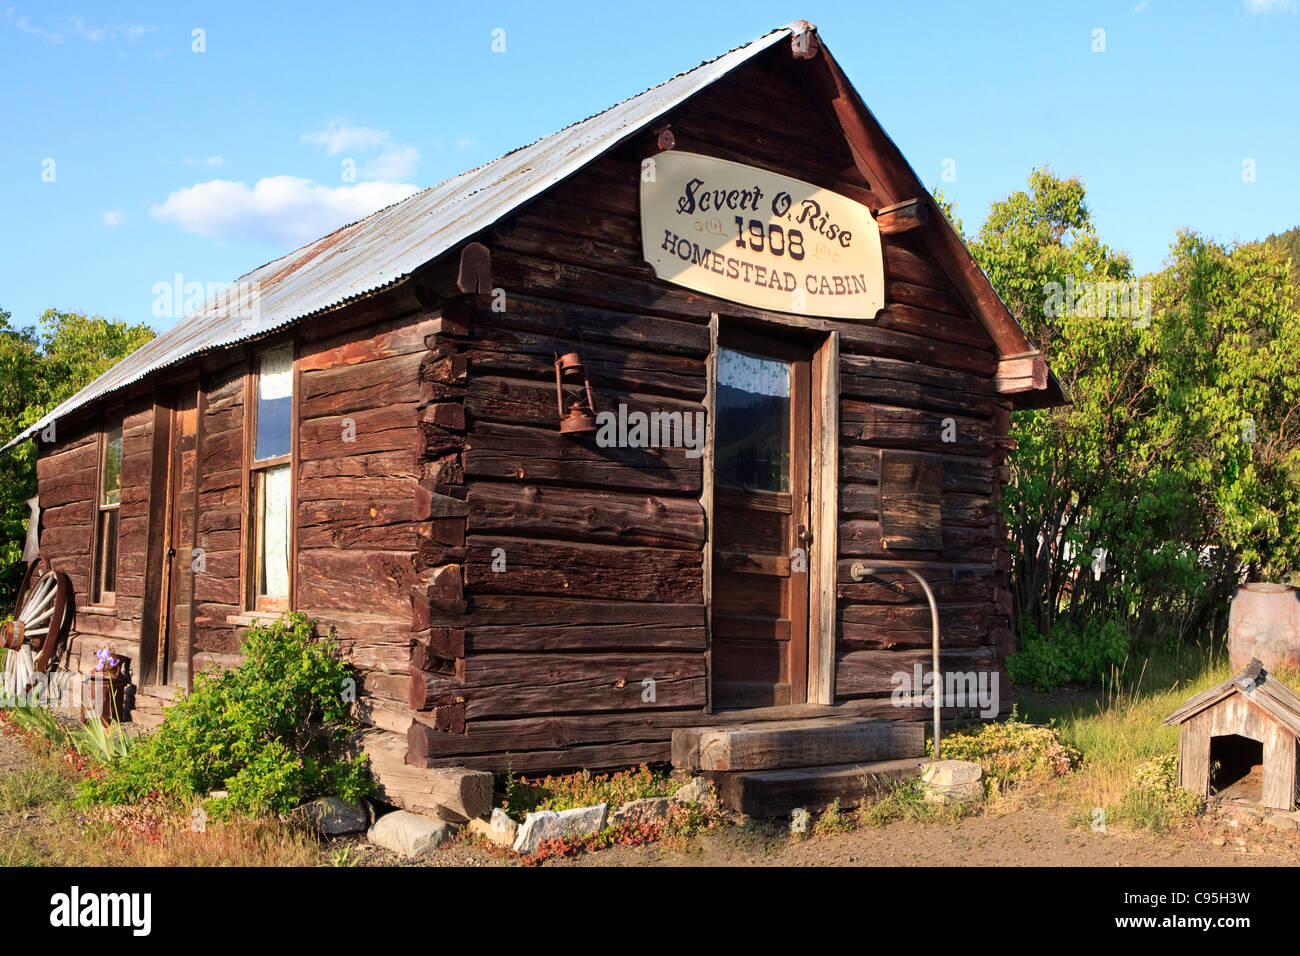 Image of the Severt O'Rise homestead cabin in Molson, Washington. Stock Photo